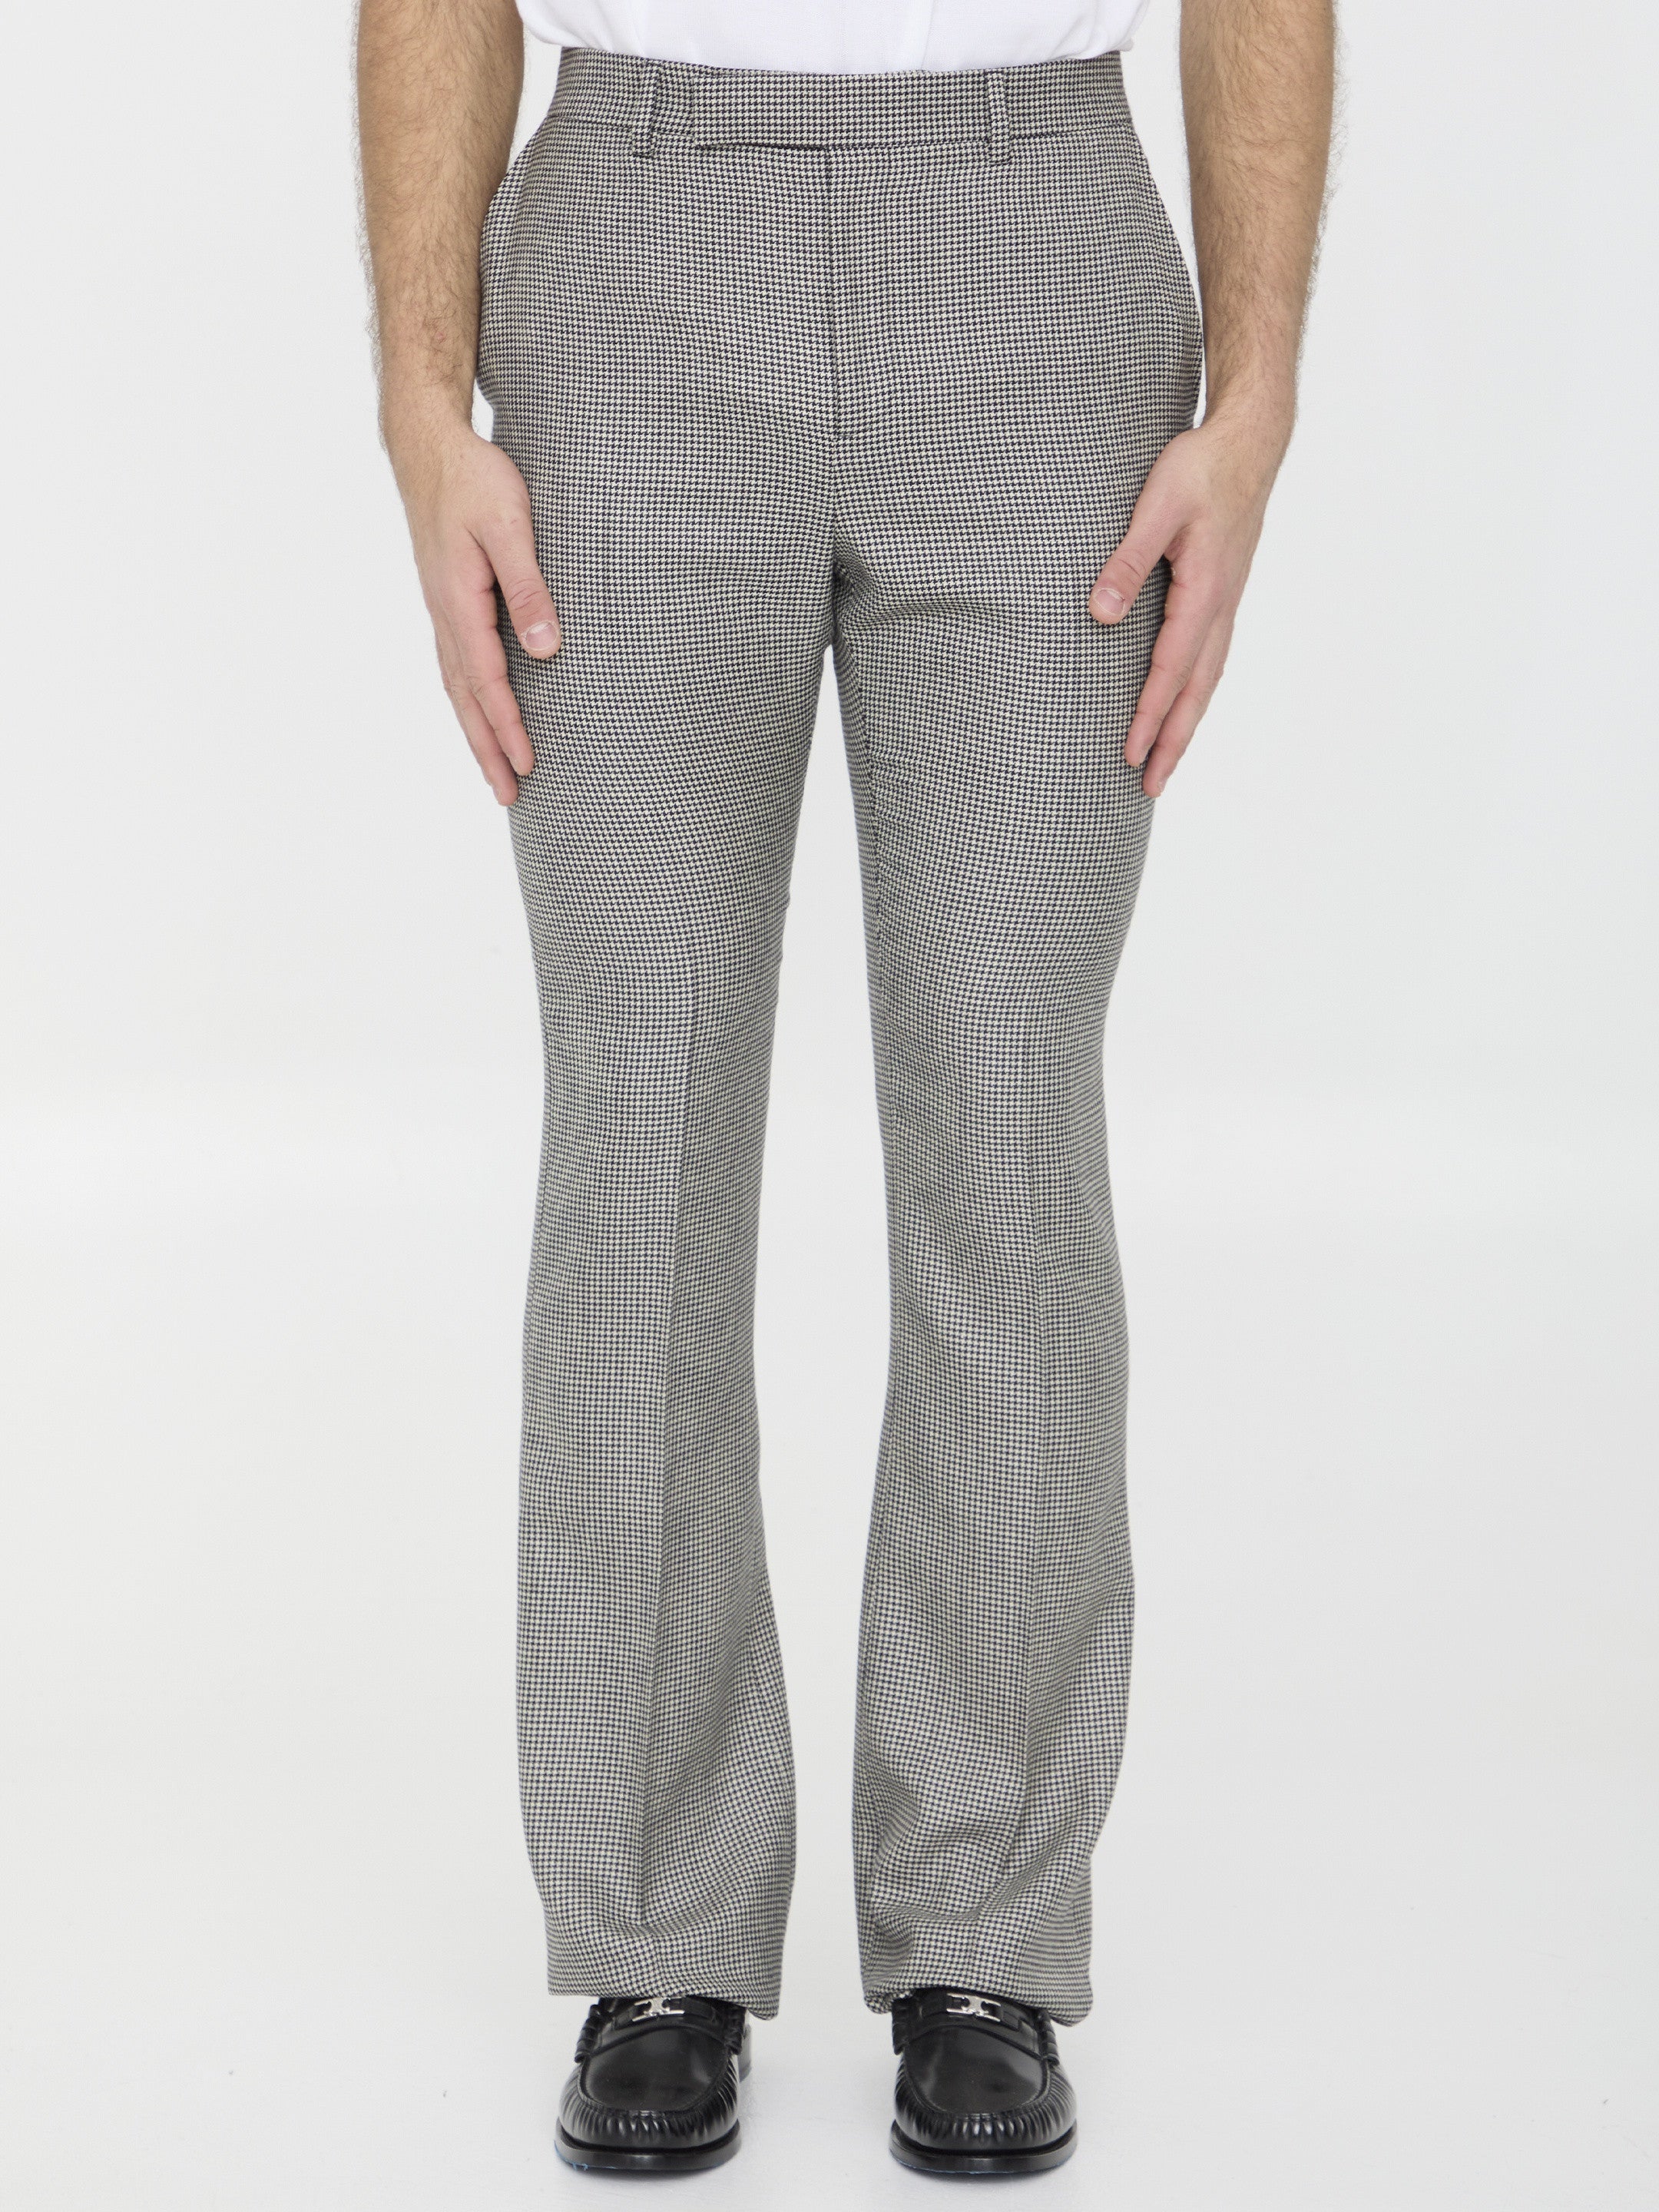 CELINE-OUTLET-SALE-Wool-and-cashmere-pants-Hosen-48-BLACK-ARCHIVE-COLLECTION.jpg